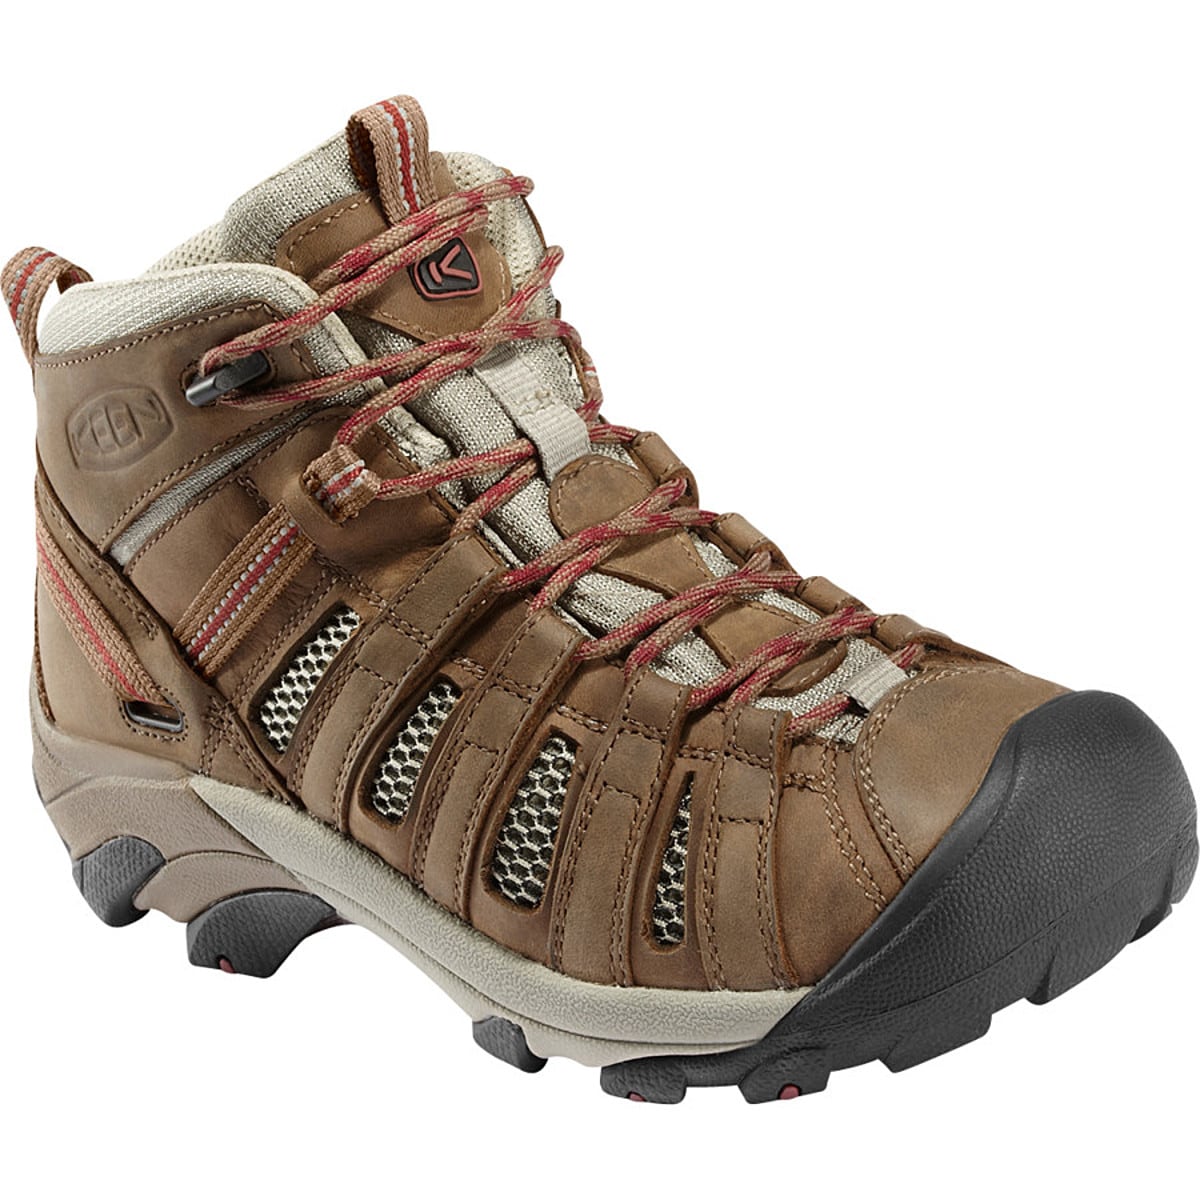 Voyageur Mid Hiking Boot - Women